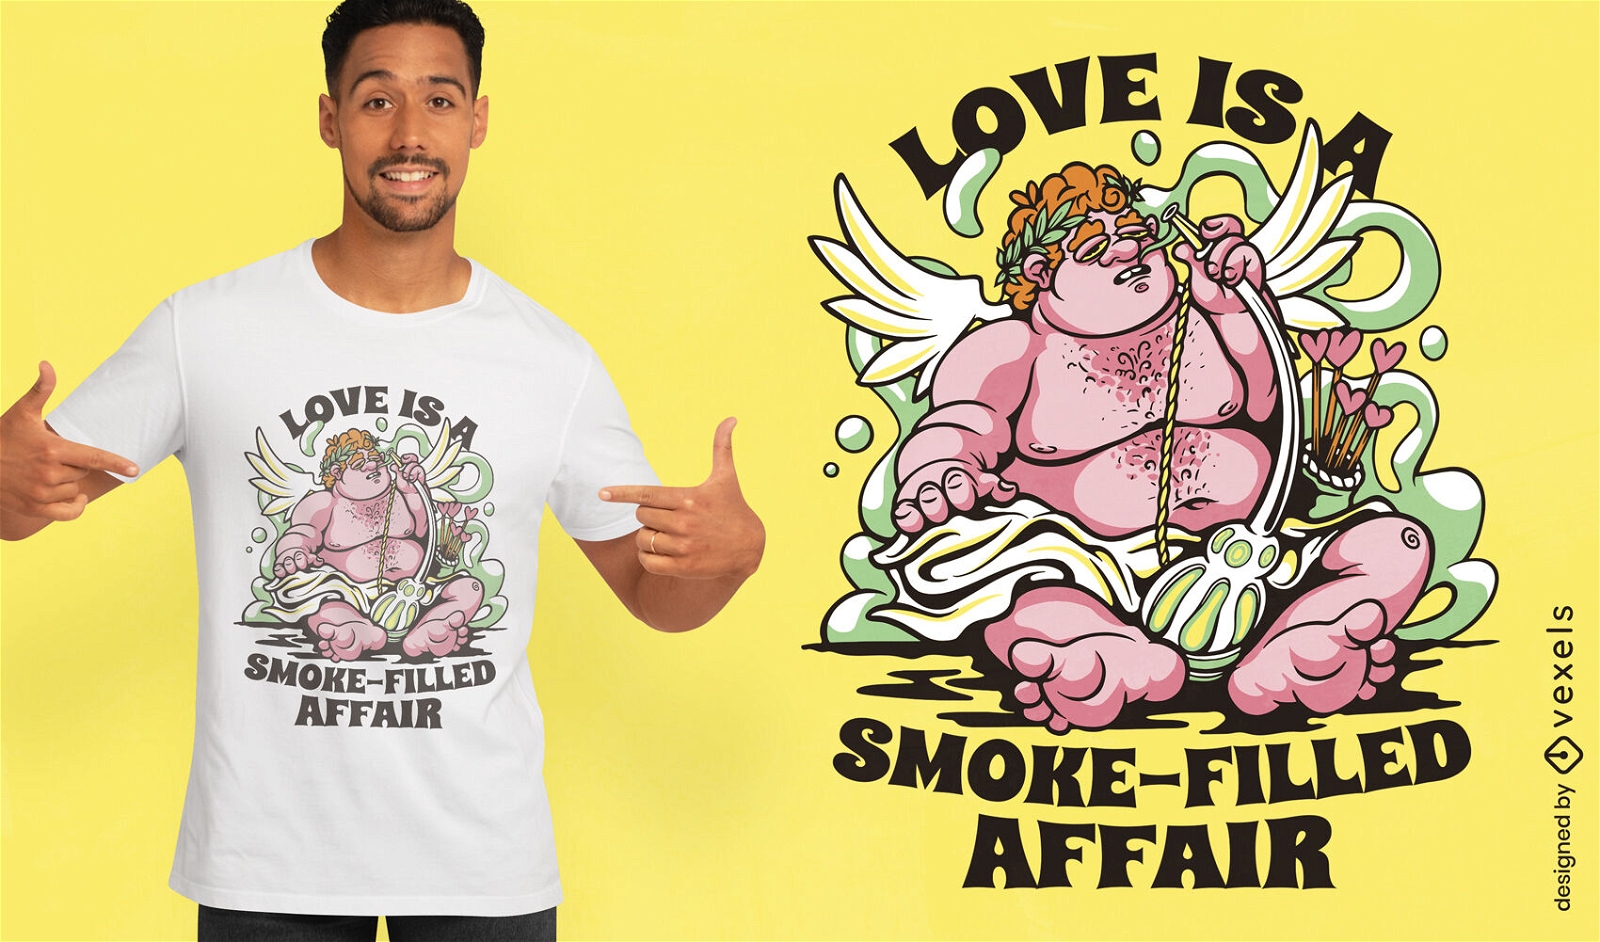 Dise?o de camiseta de amor ?ngel fumando shisha